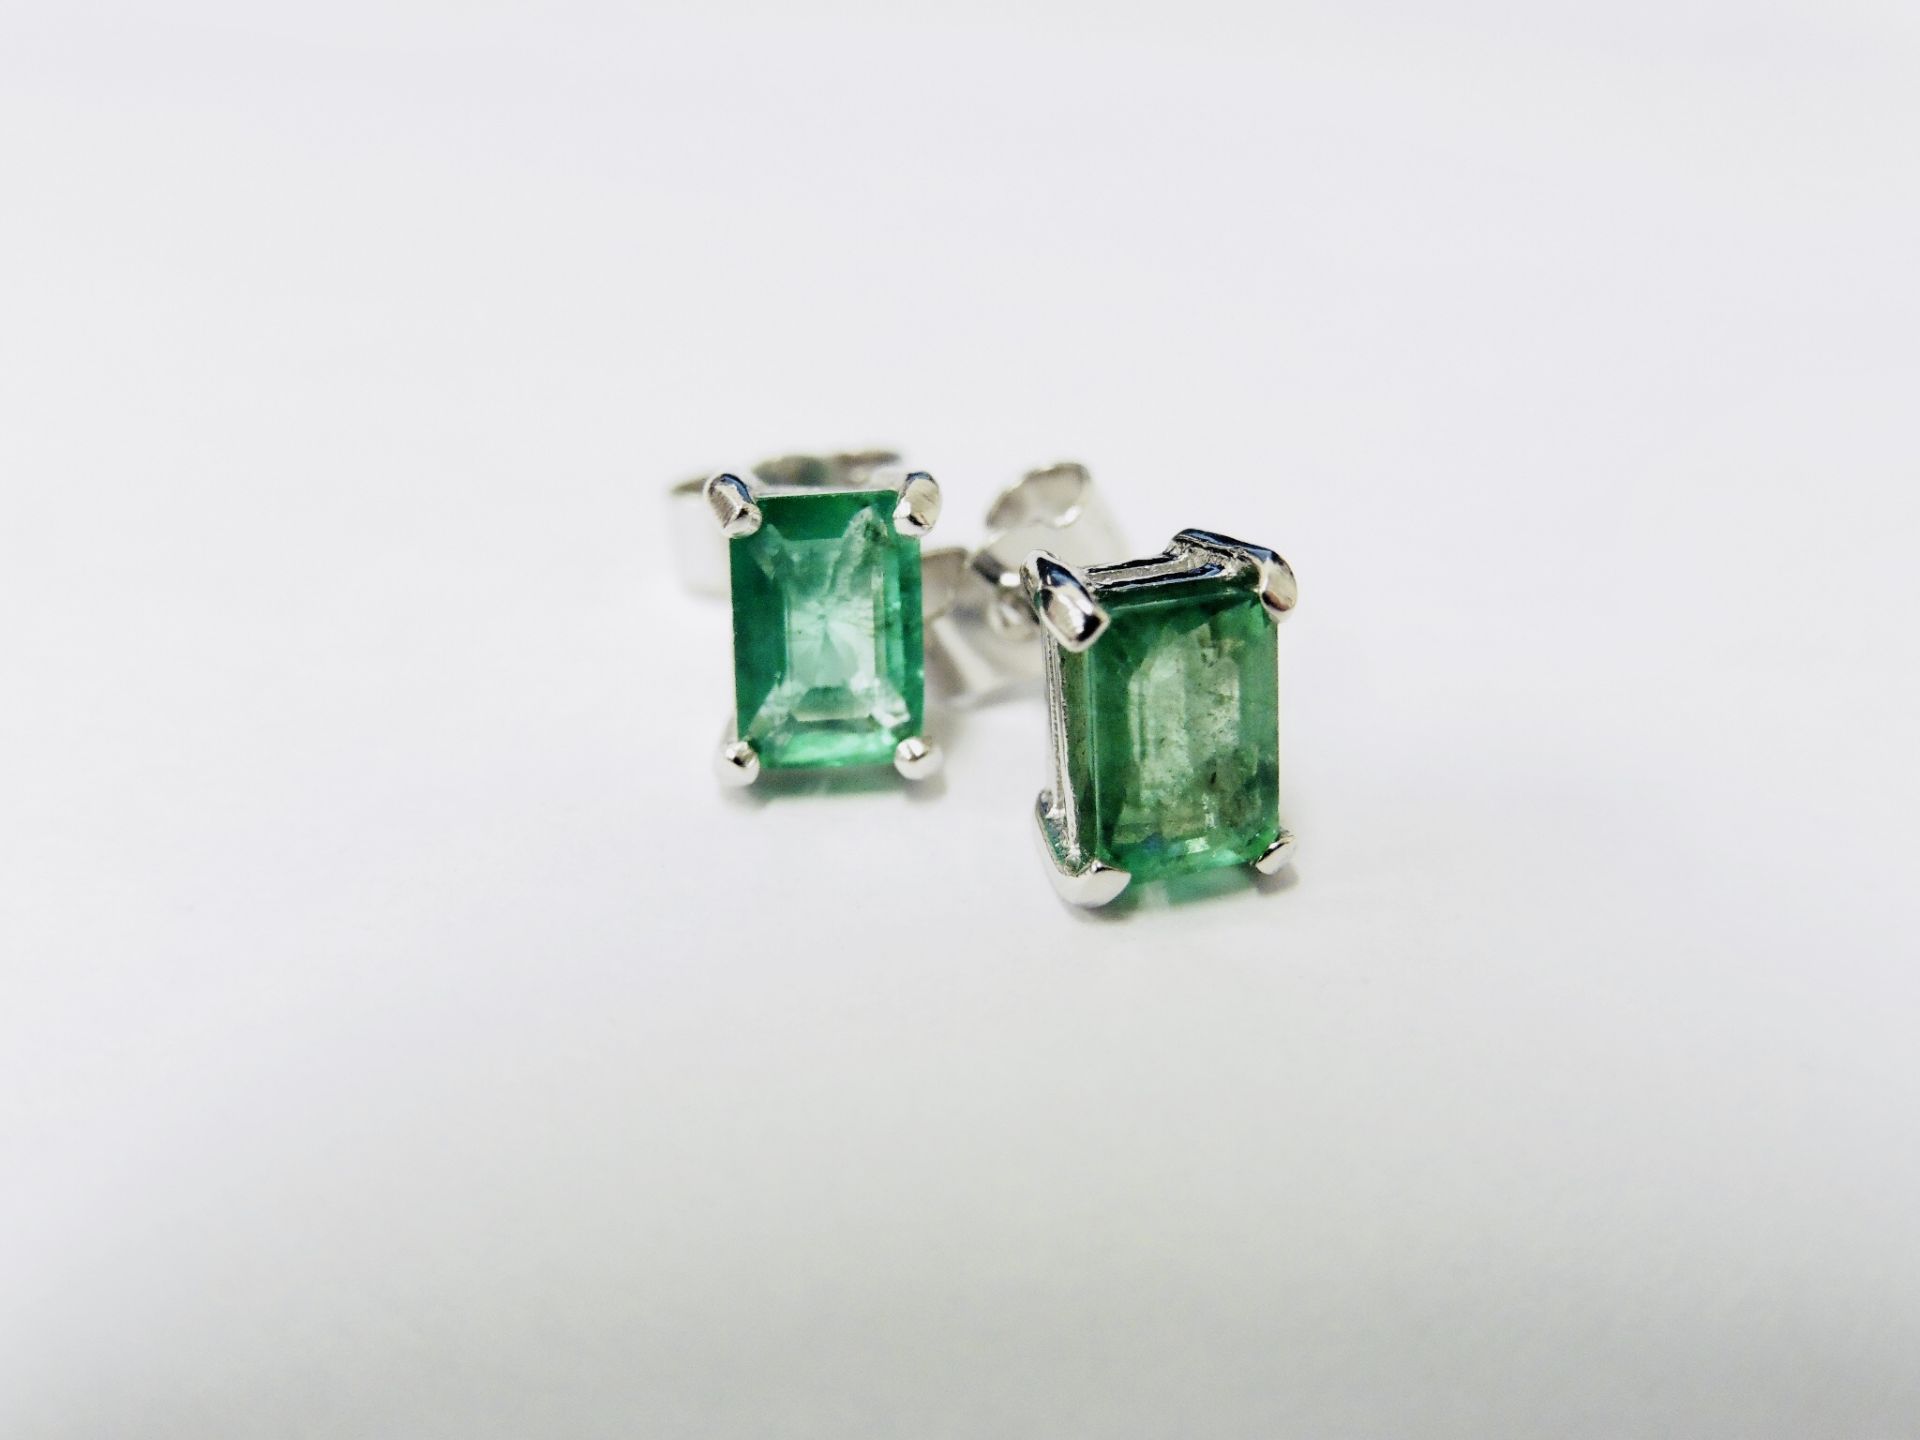 1.40ct stud earrings in platinum 950. 2 rectangular cut emeralds ( treated ) set in a simple 4